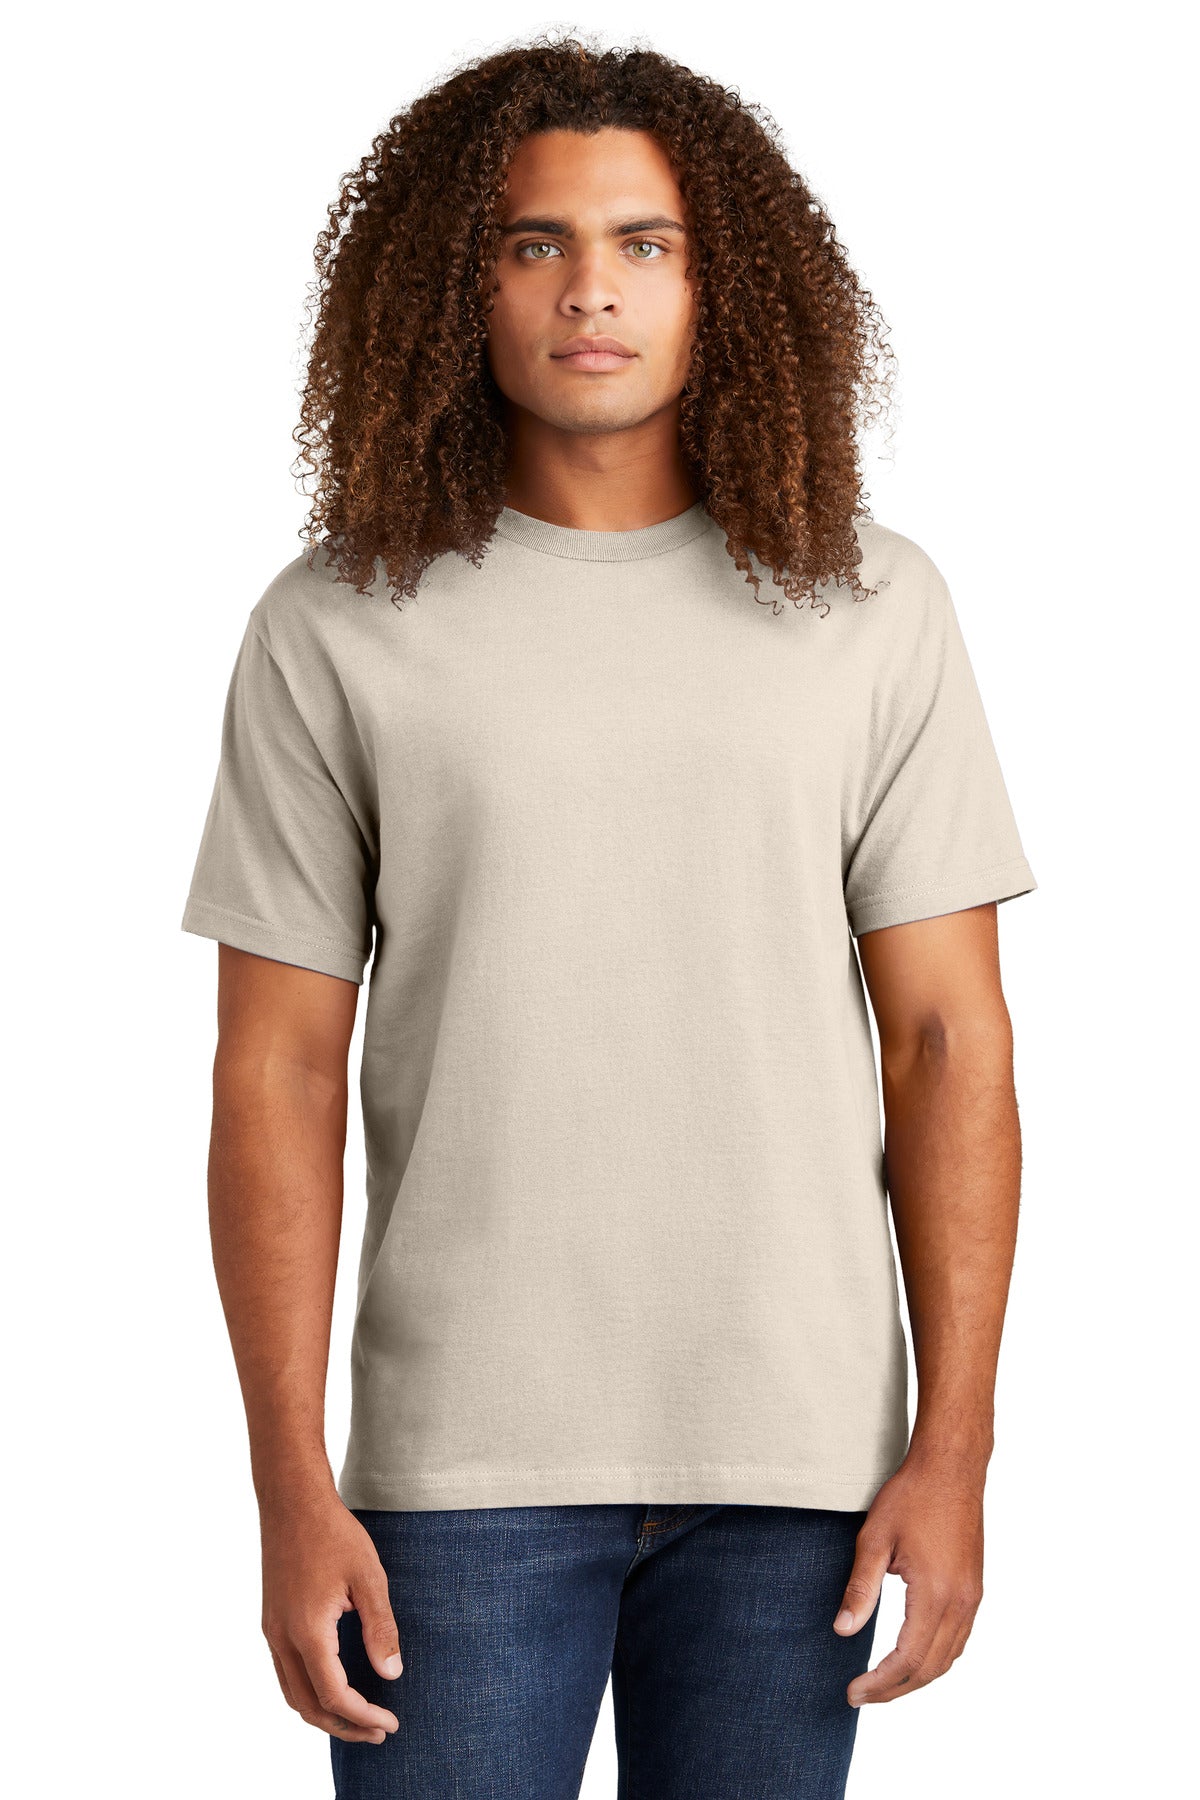 Hanes Comfortsoft 50/50 Cotton/Poly T-Shirt